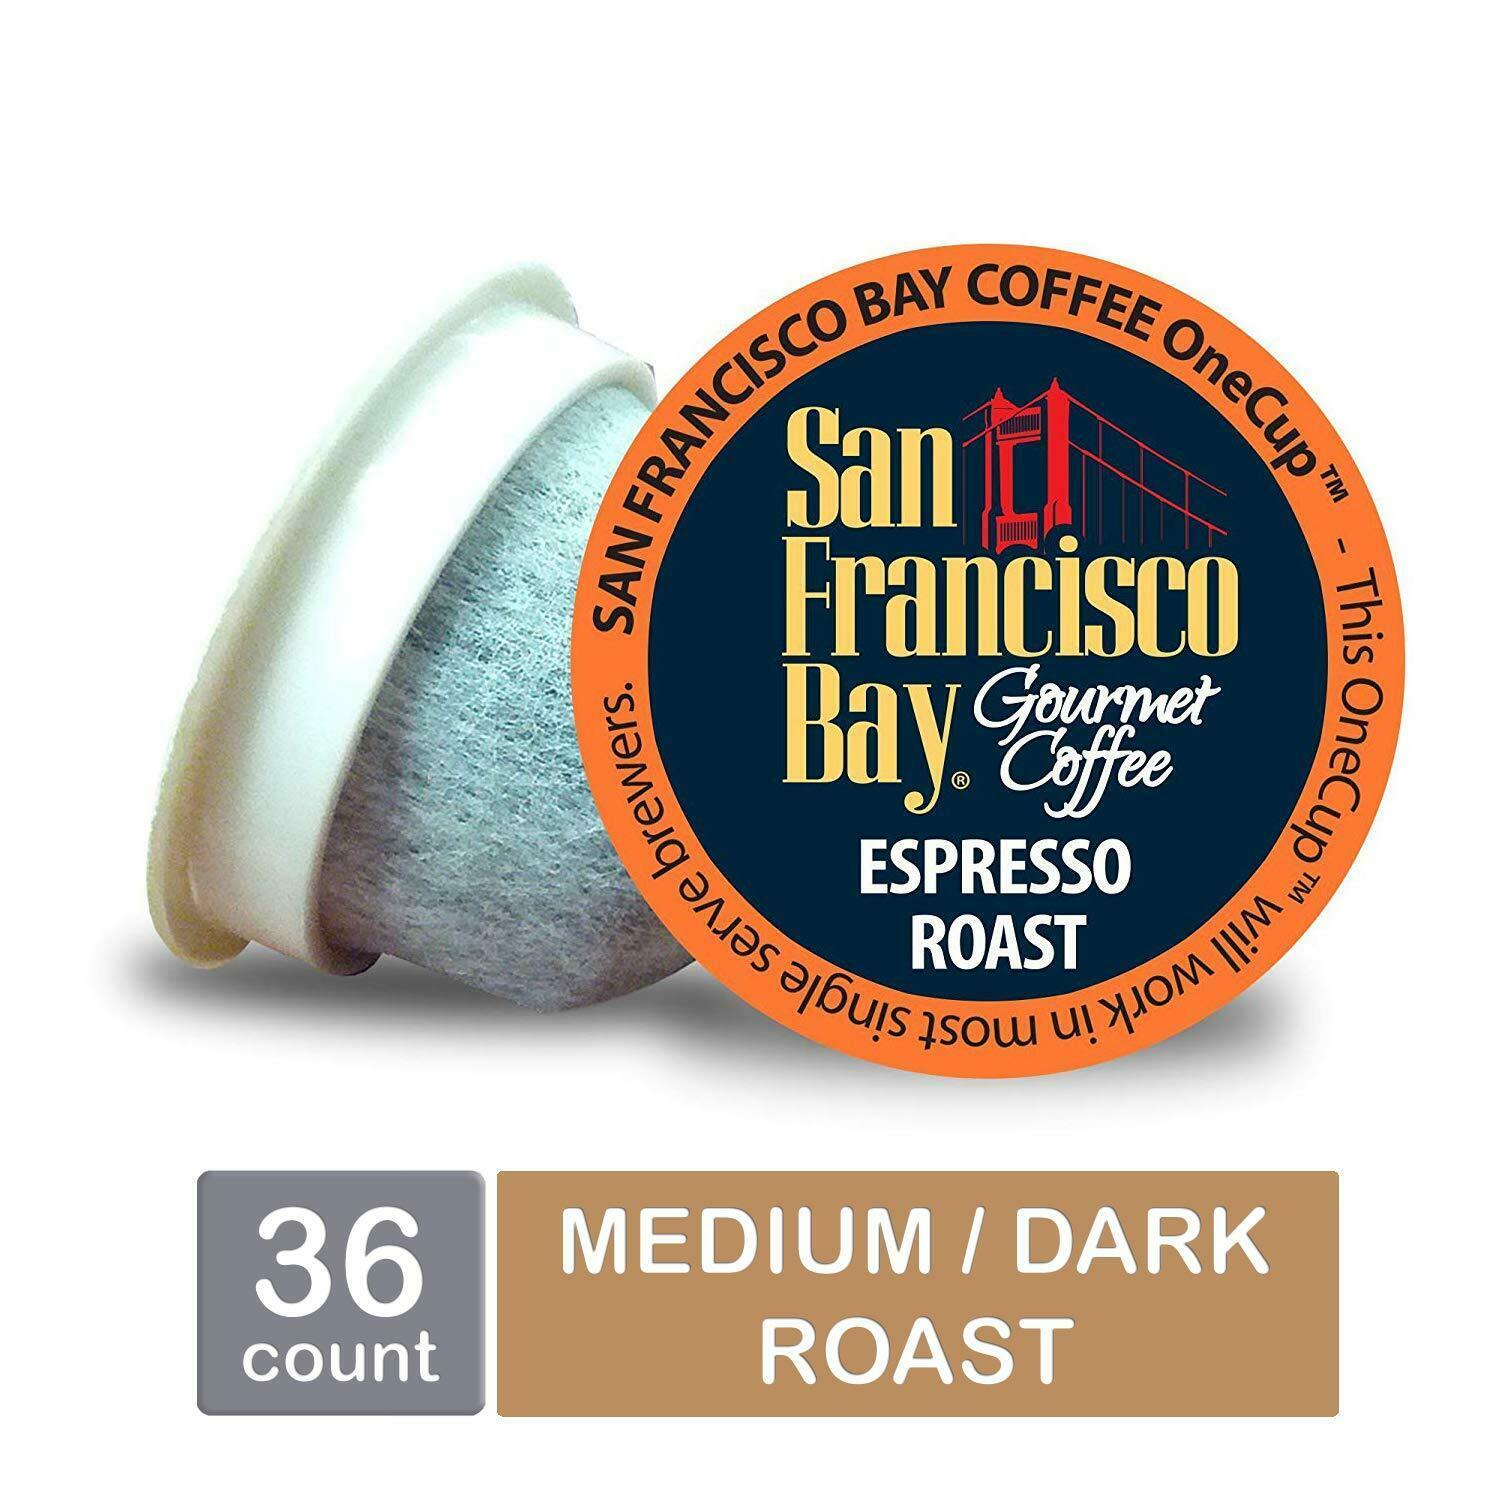 San Francisco Bay OneCup Espresso Roast Coffee 36 to 180 Keurig K cup Pick Size  - $34.89 - $119.89